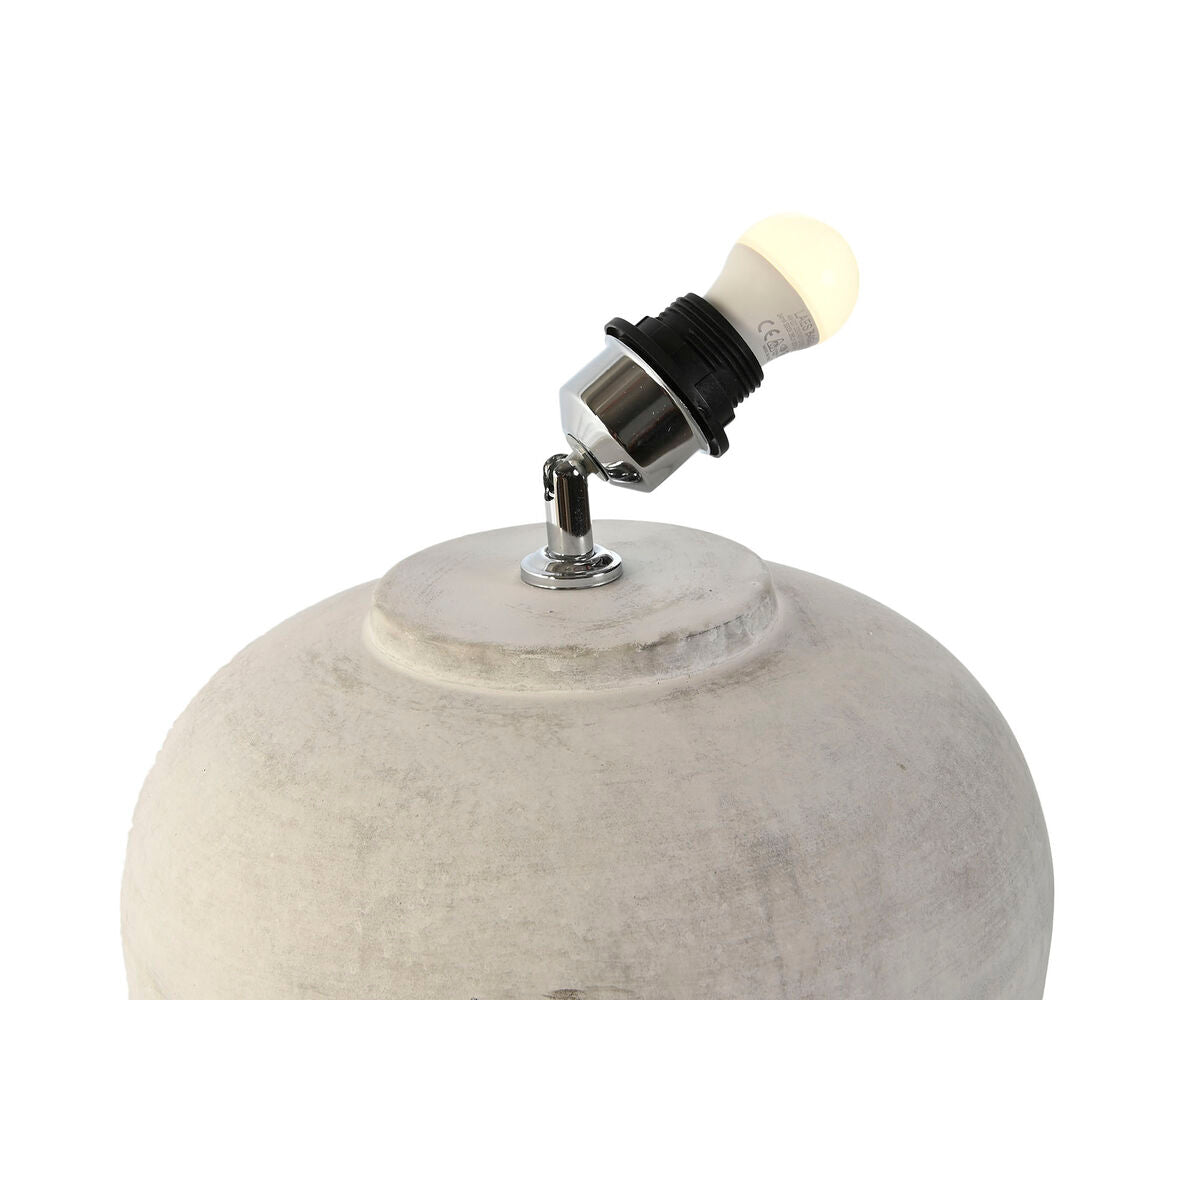 Bordslampa Home Esprit Vit Cement 50 W 220 V 31 X 31 X 50 Cm